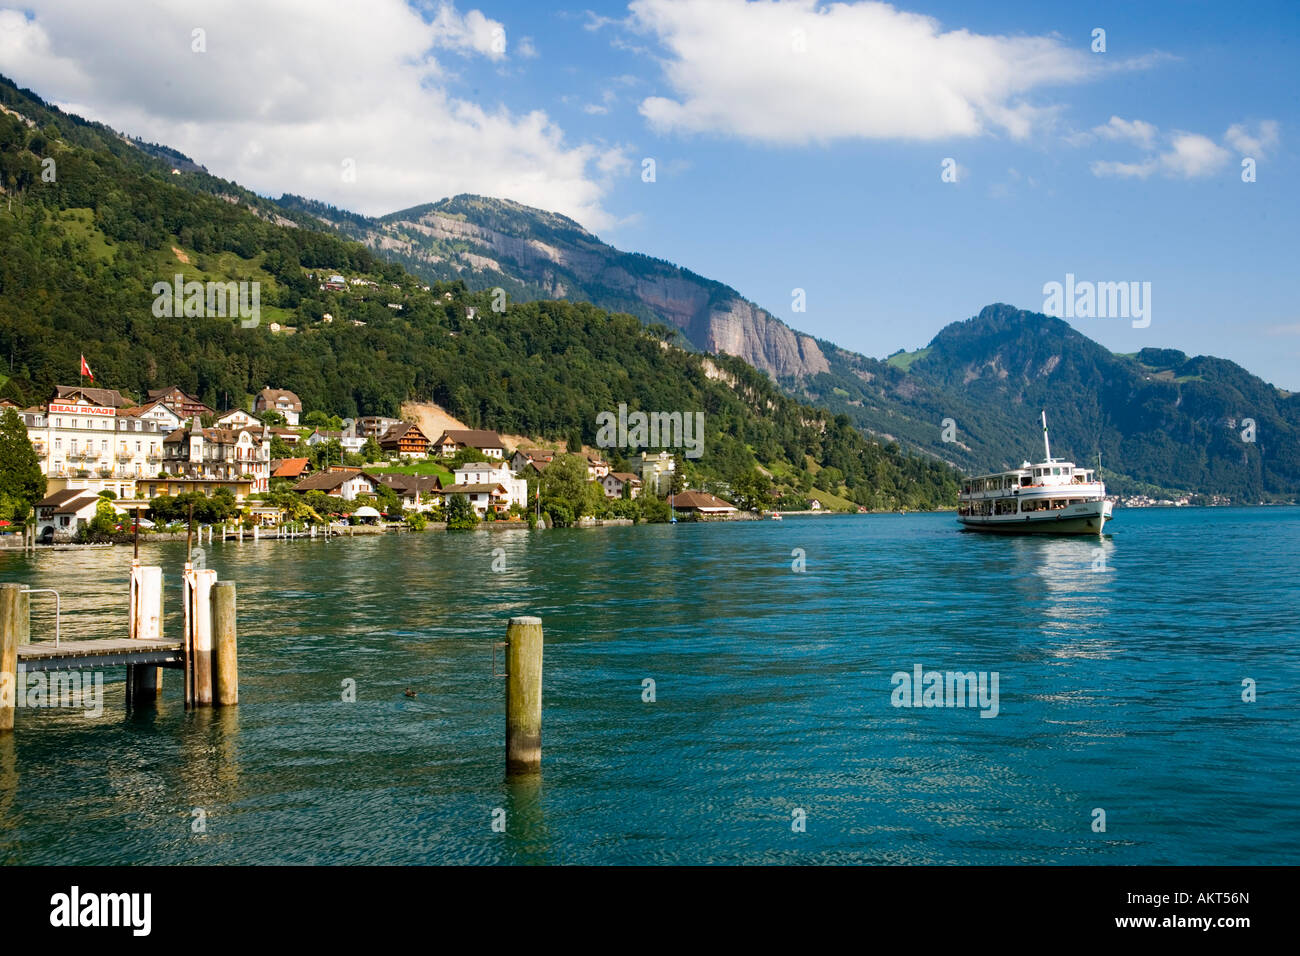 Navigazione sul lago di Lucerna. Svizzera Foto stock - Alamy